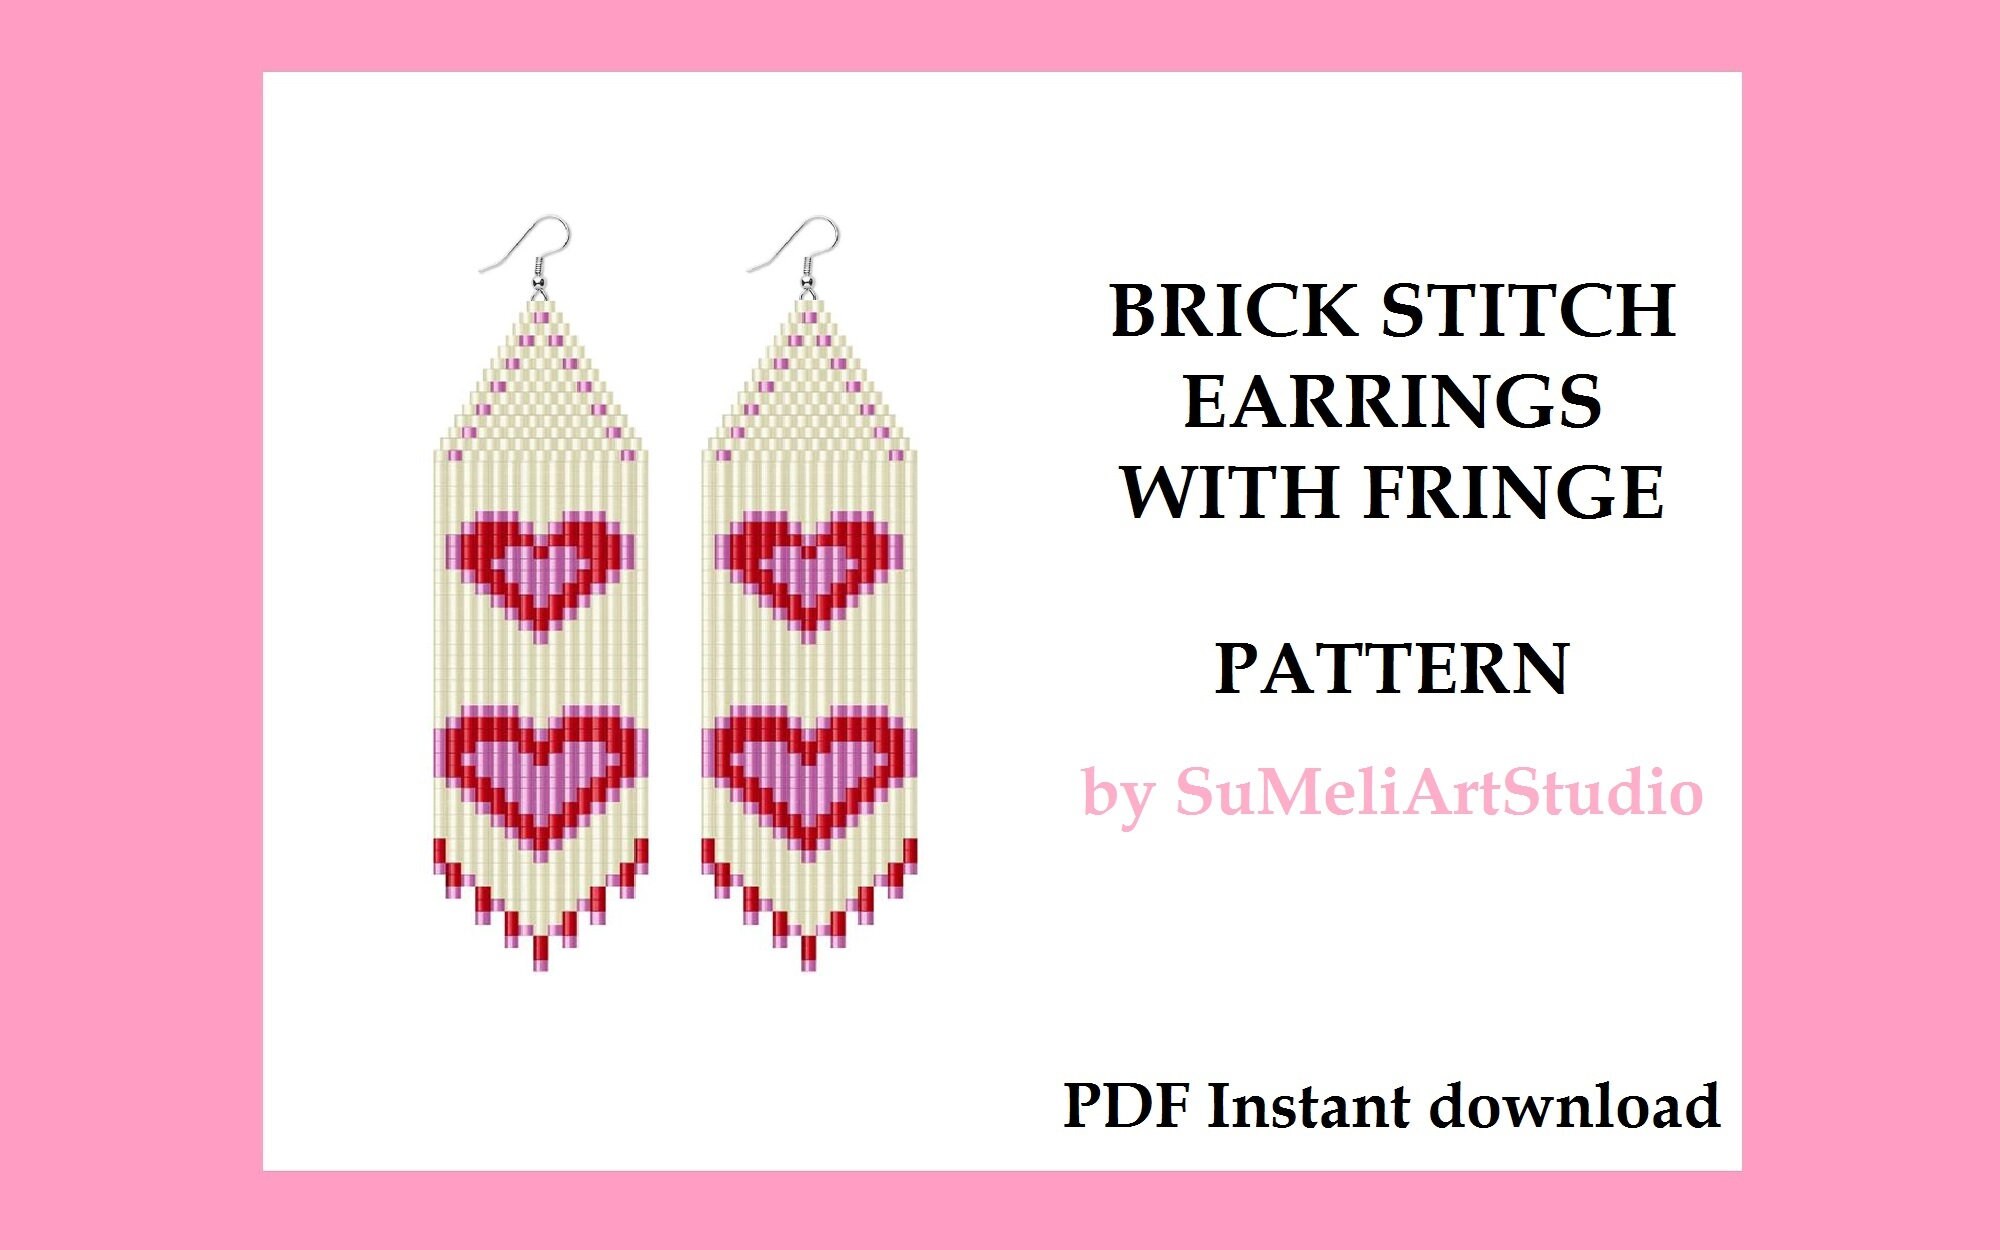 Cat with Heart Brick stitch pattern miyuki delica PDF